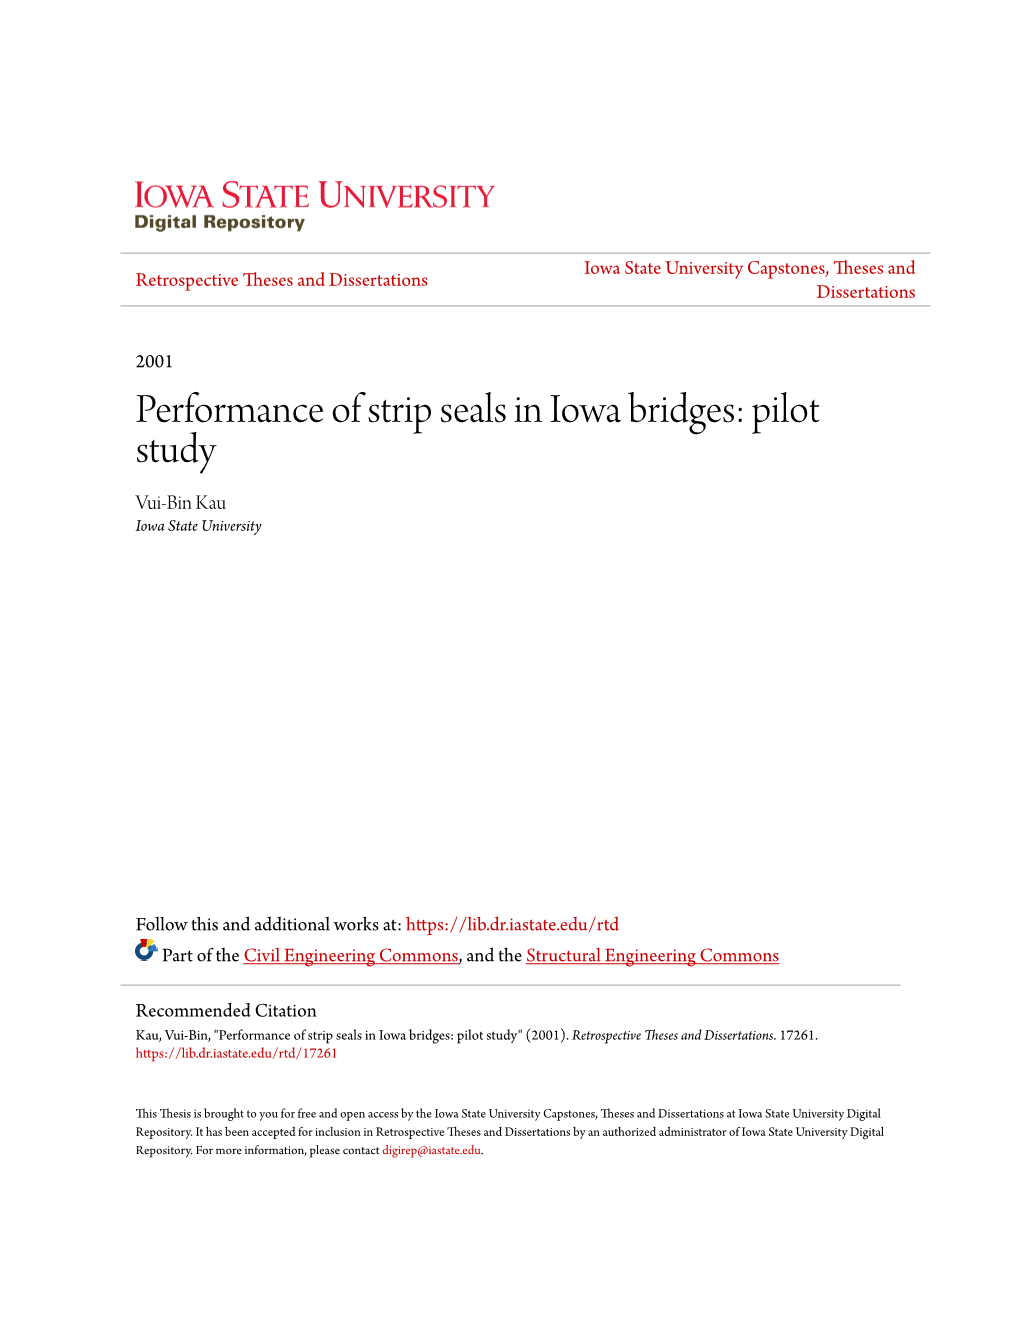 Performance of Strip Seals in Iowa Bridges: Pilot Study Vui-Bin Kau Iowa State University